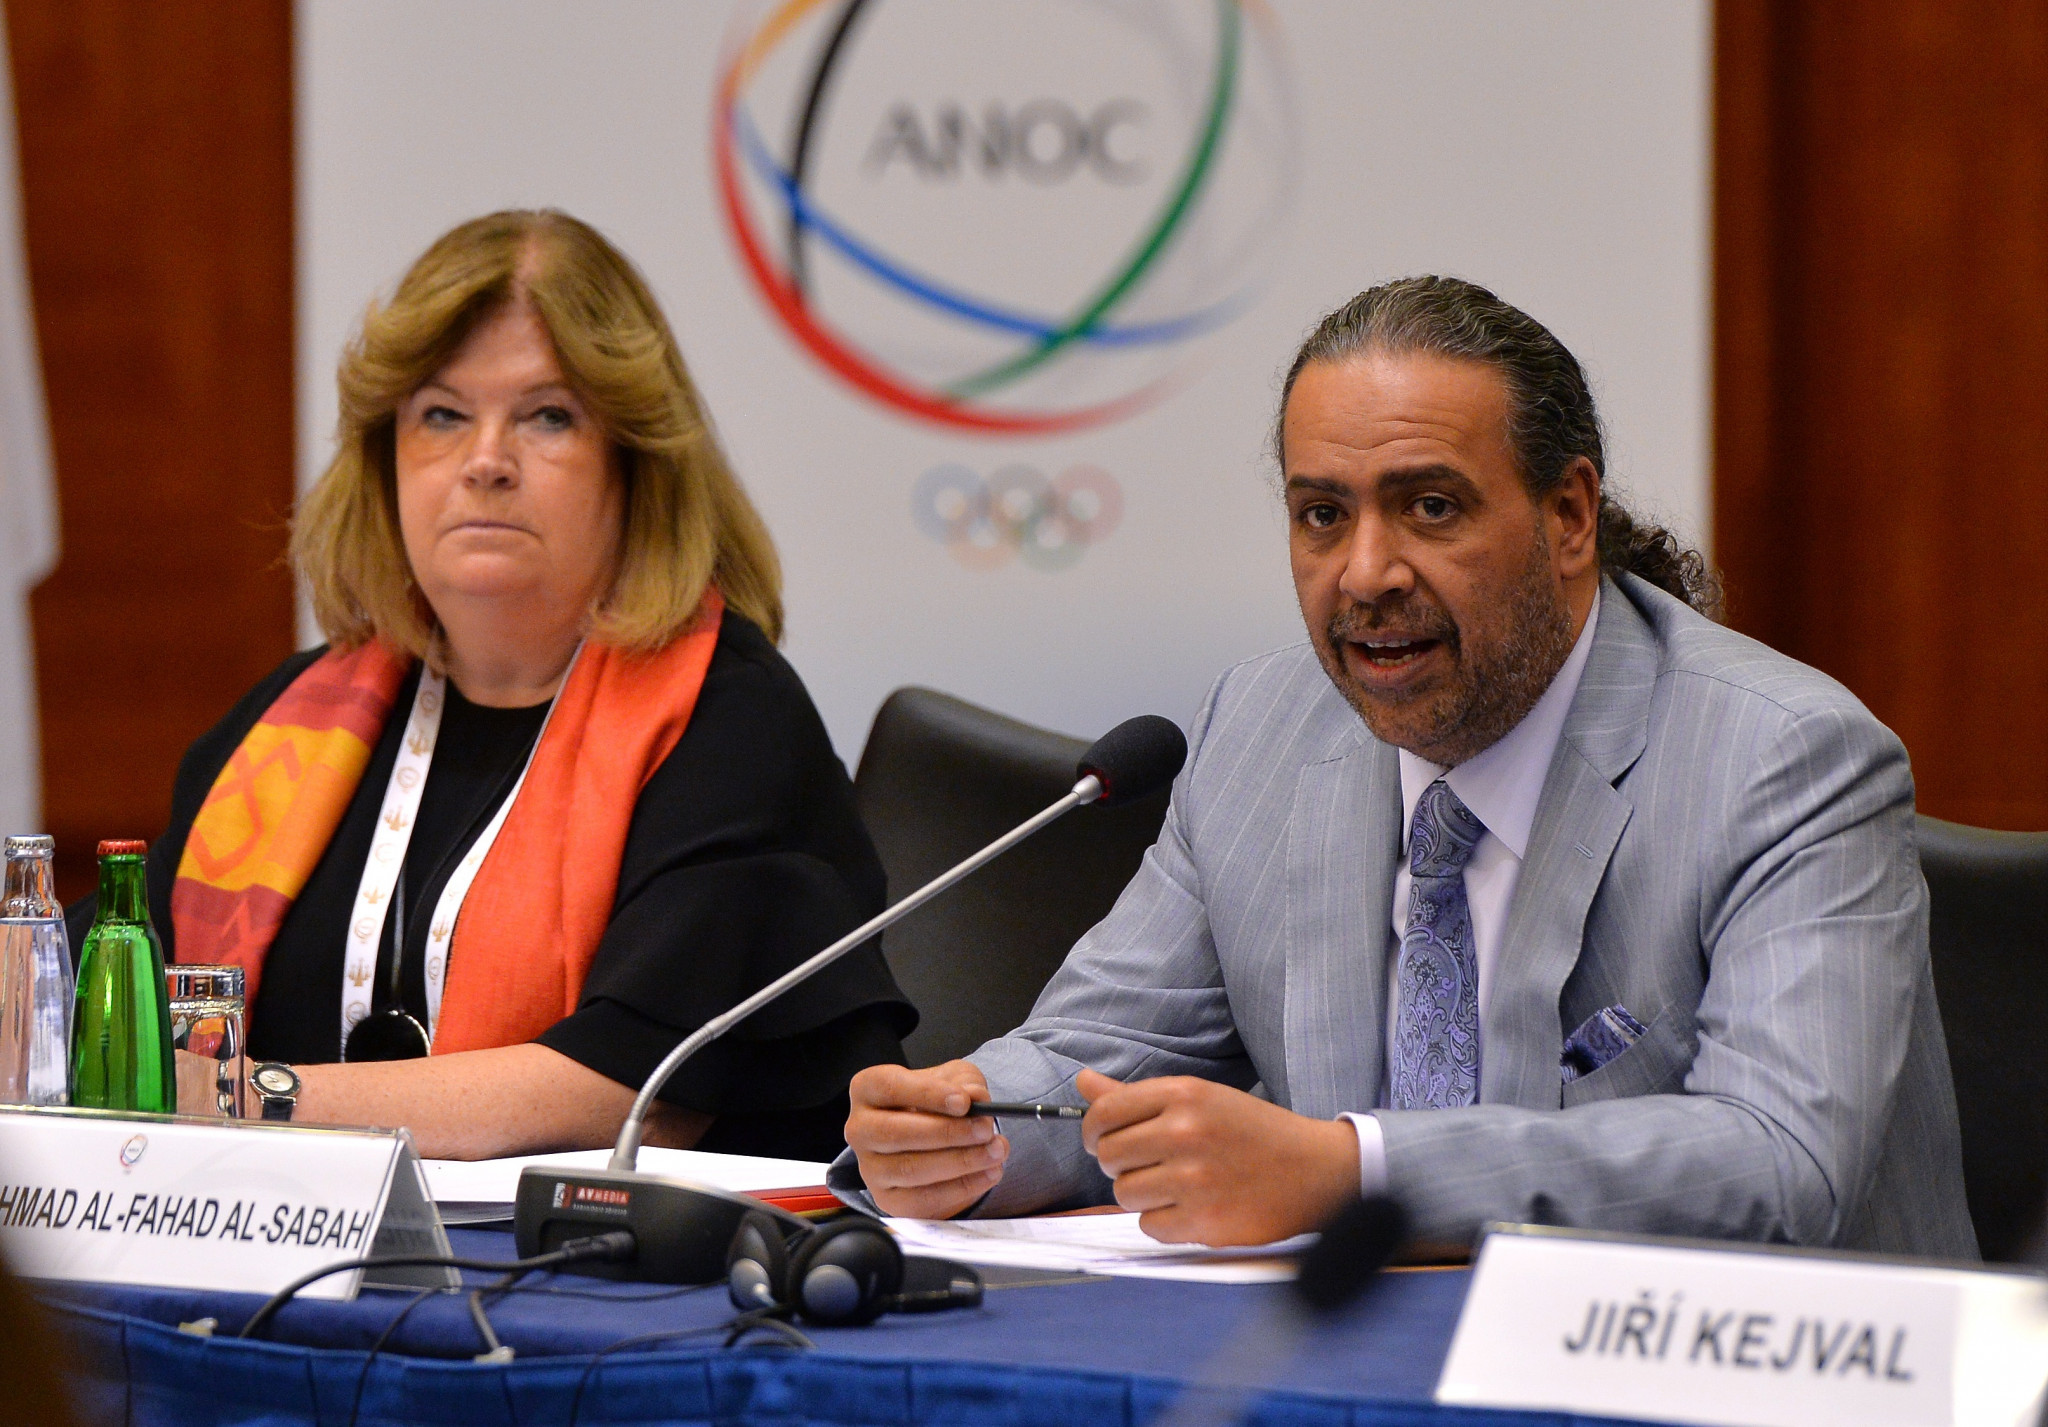 ANOC President Sheikh Ahmad Al-Fahad Al-Sabah, right, and secretary general Gunilla Lindberg pictured at today's meeting